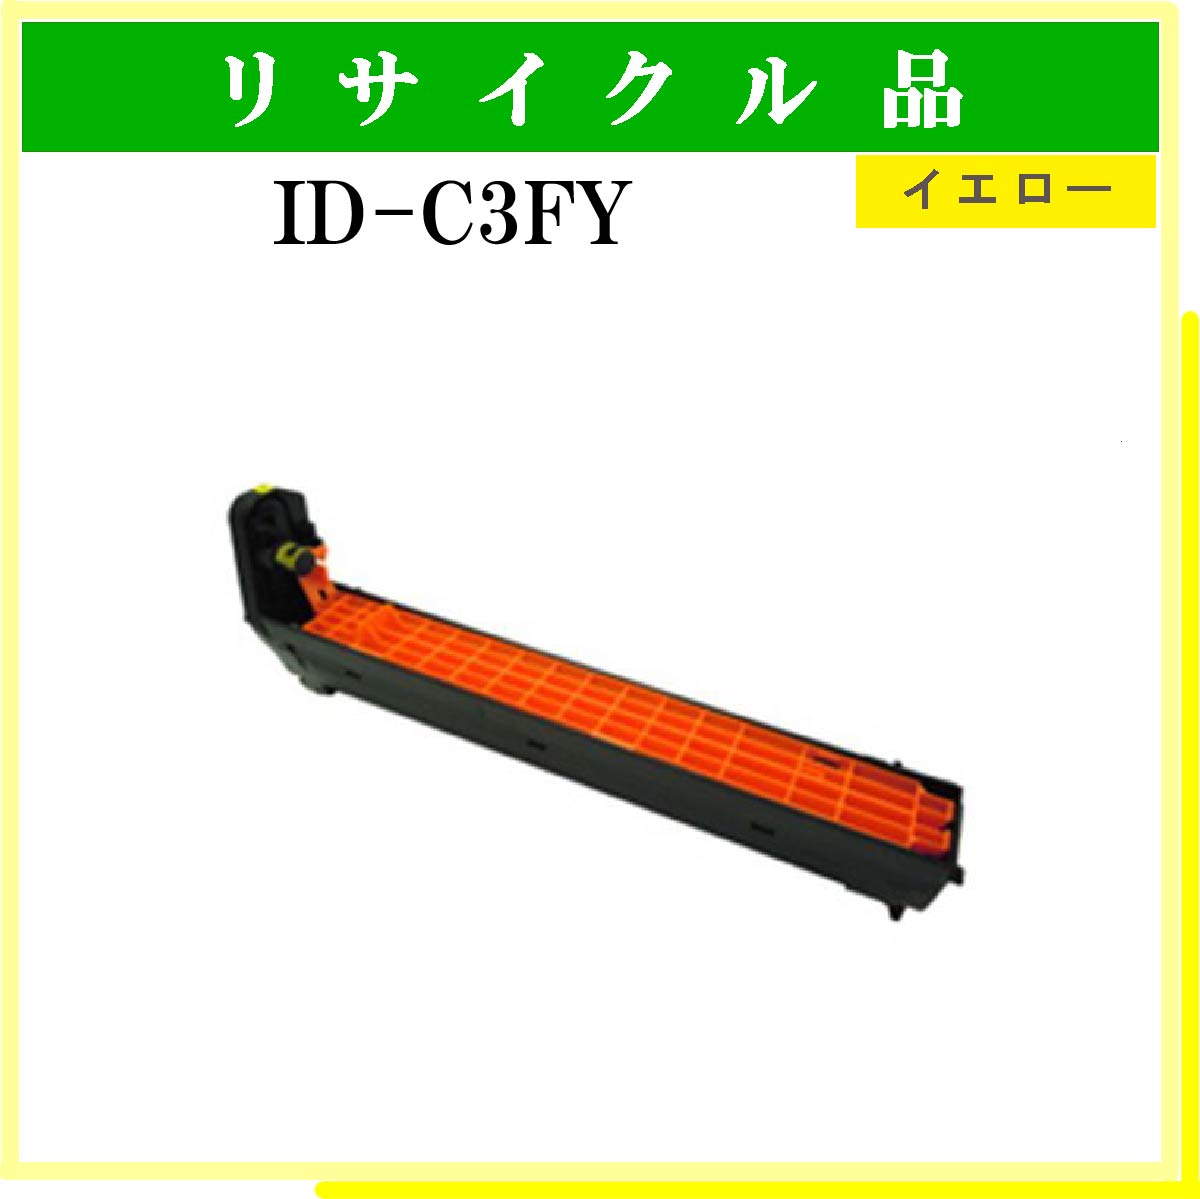 ID-C3FY